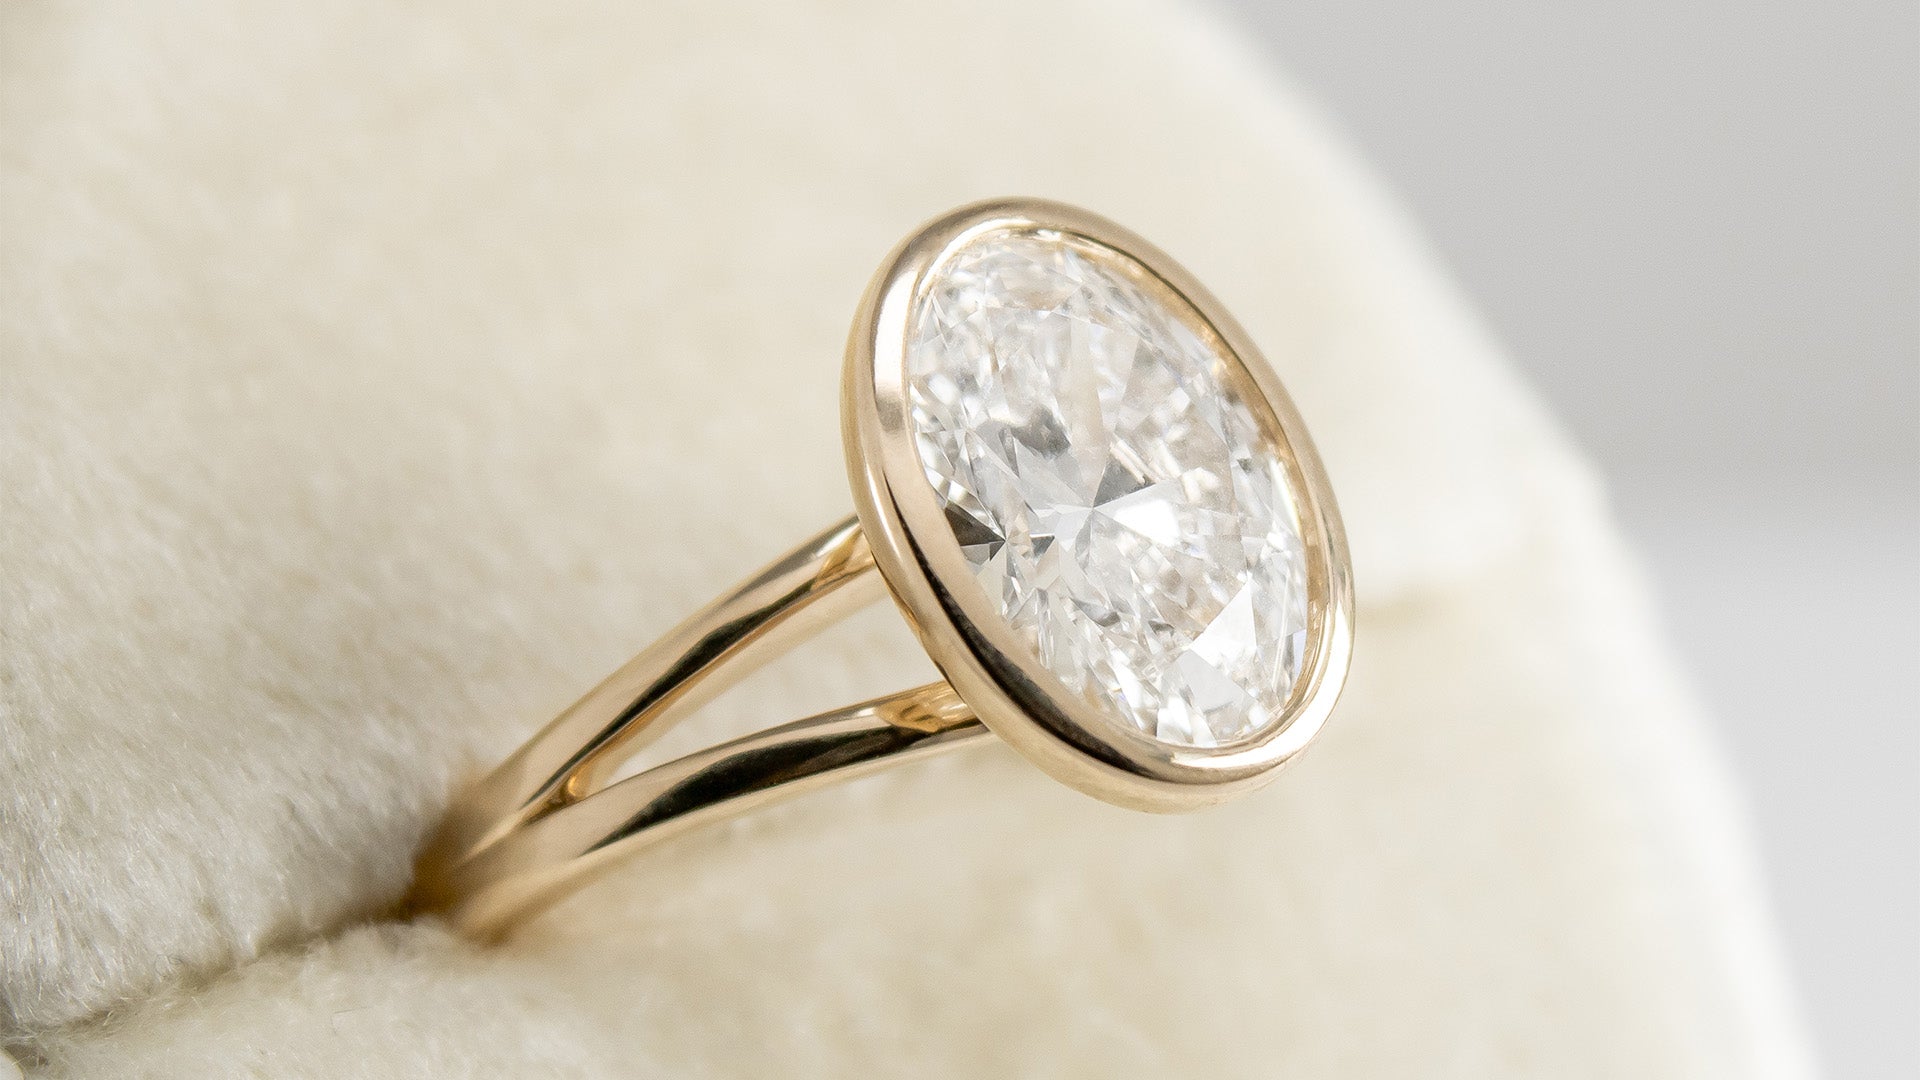 The Emery bezel Set Oval Diamond Ring In Yellow Gold | Lisa Robin